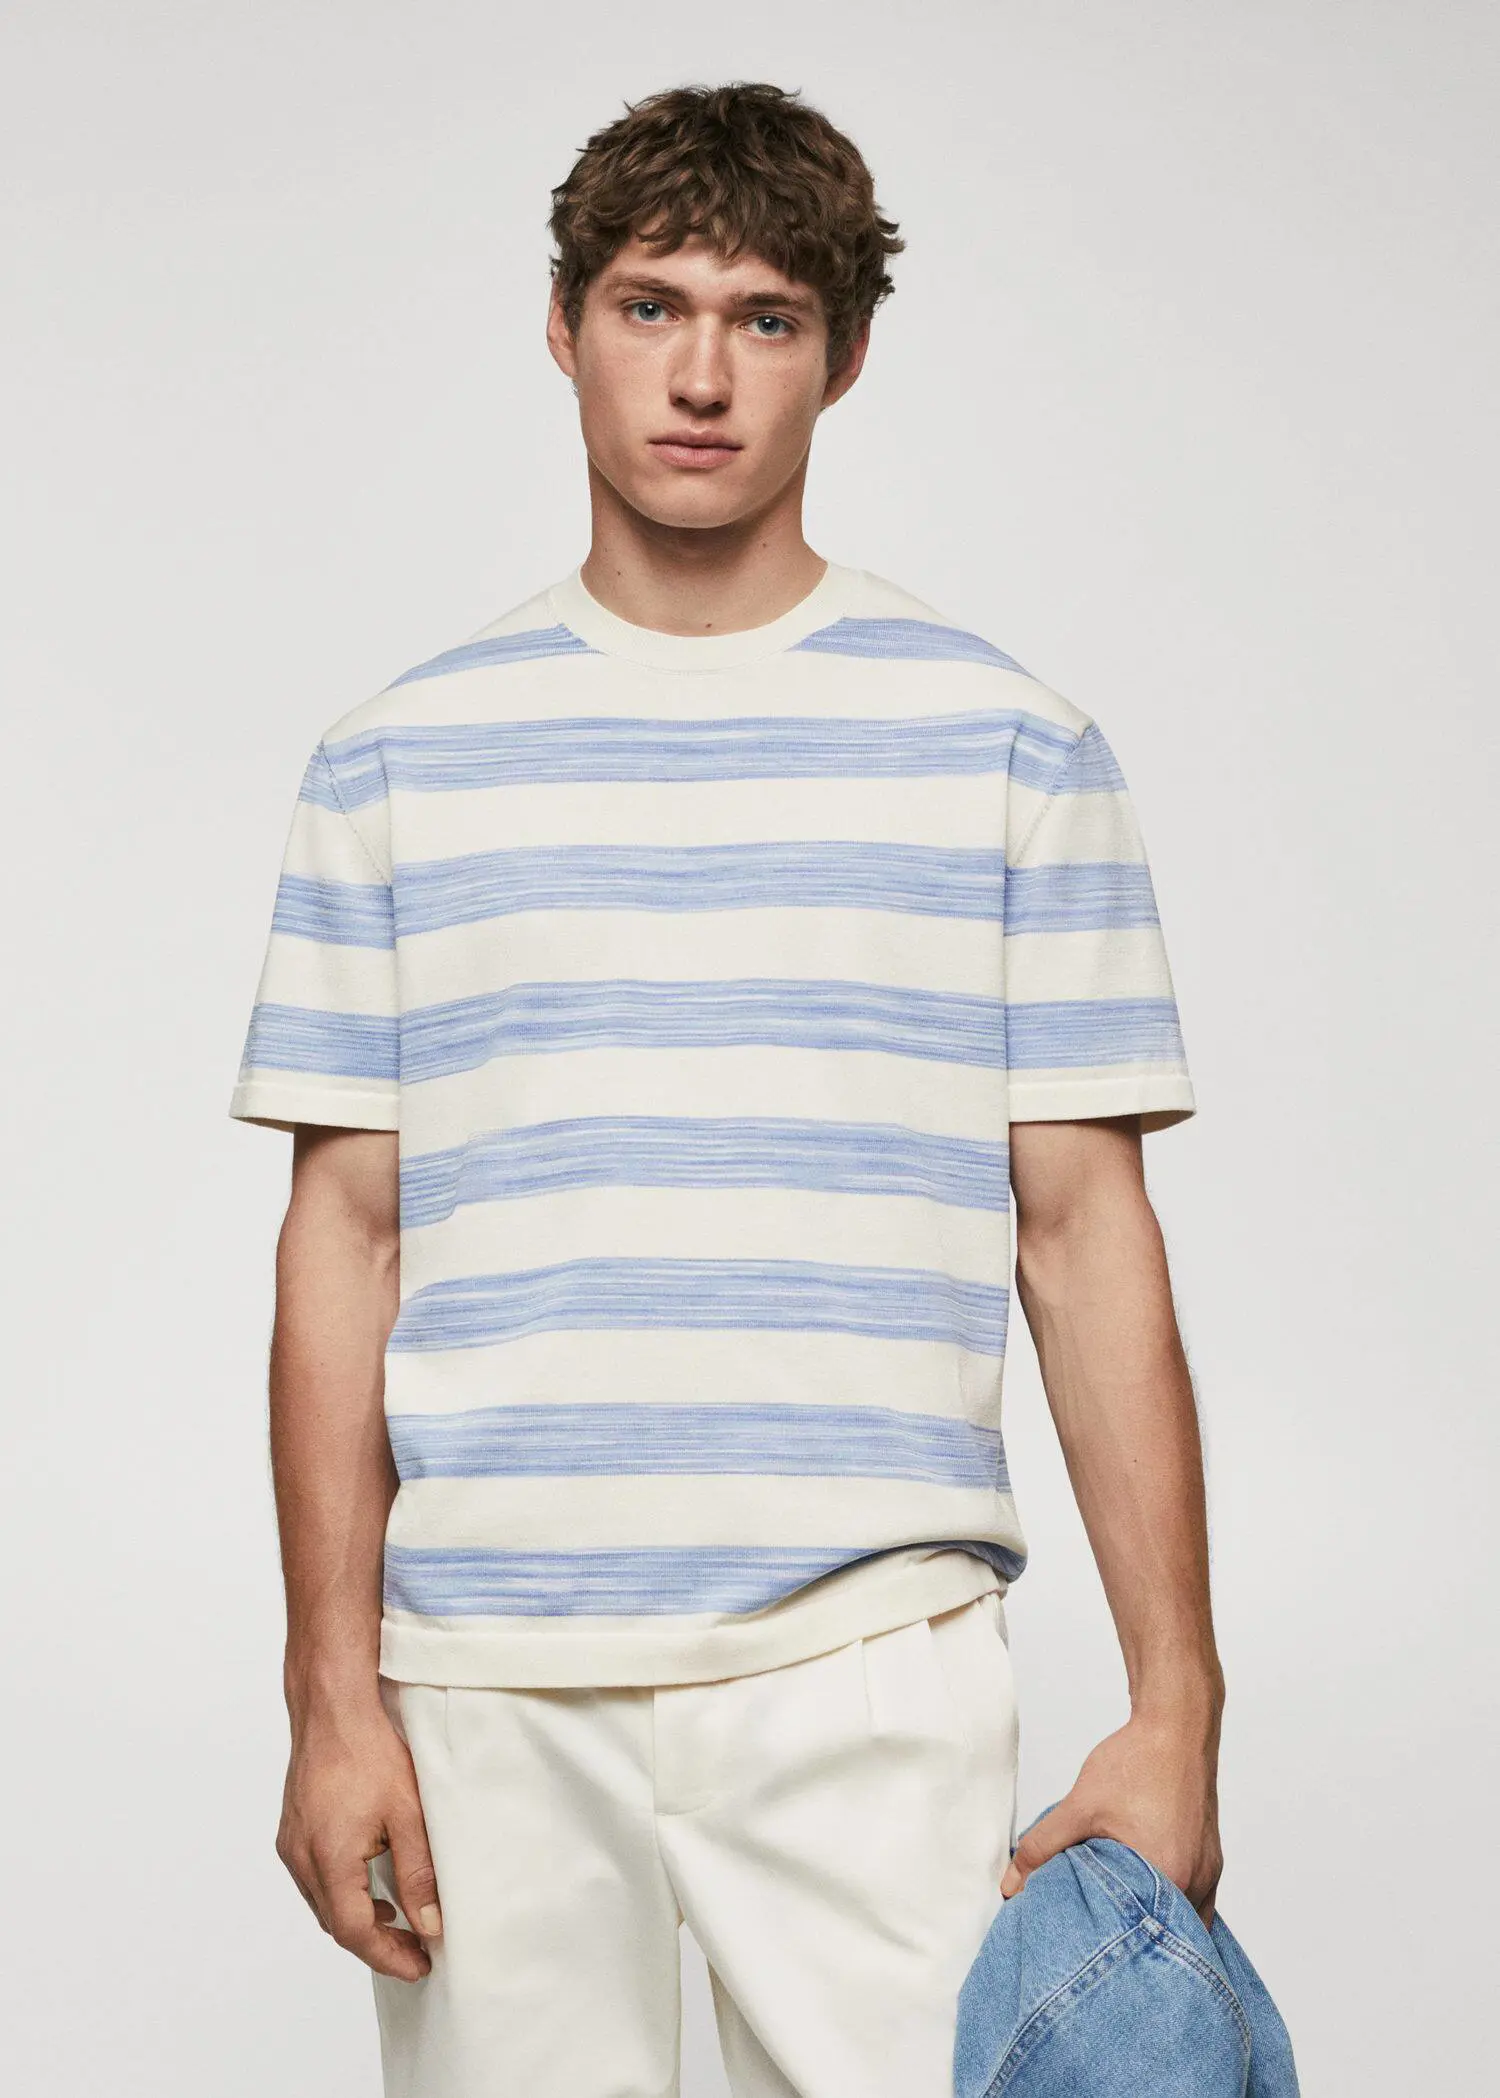 Mango Striped jersey T-shirt. a young man wearing a blue and white striped shirt. 